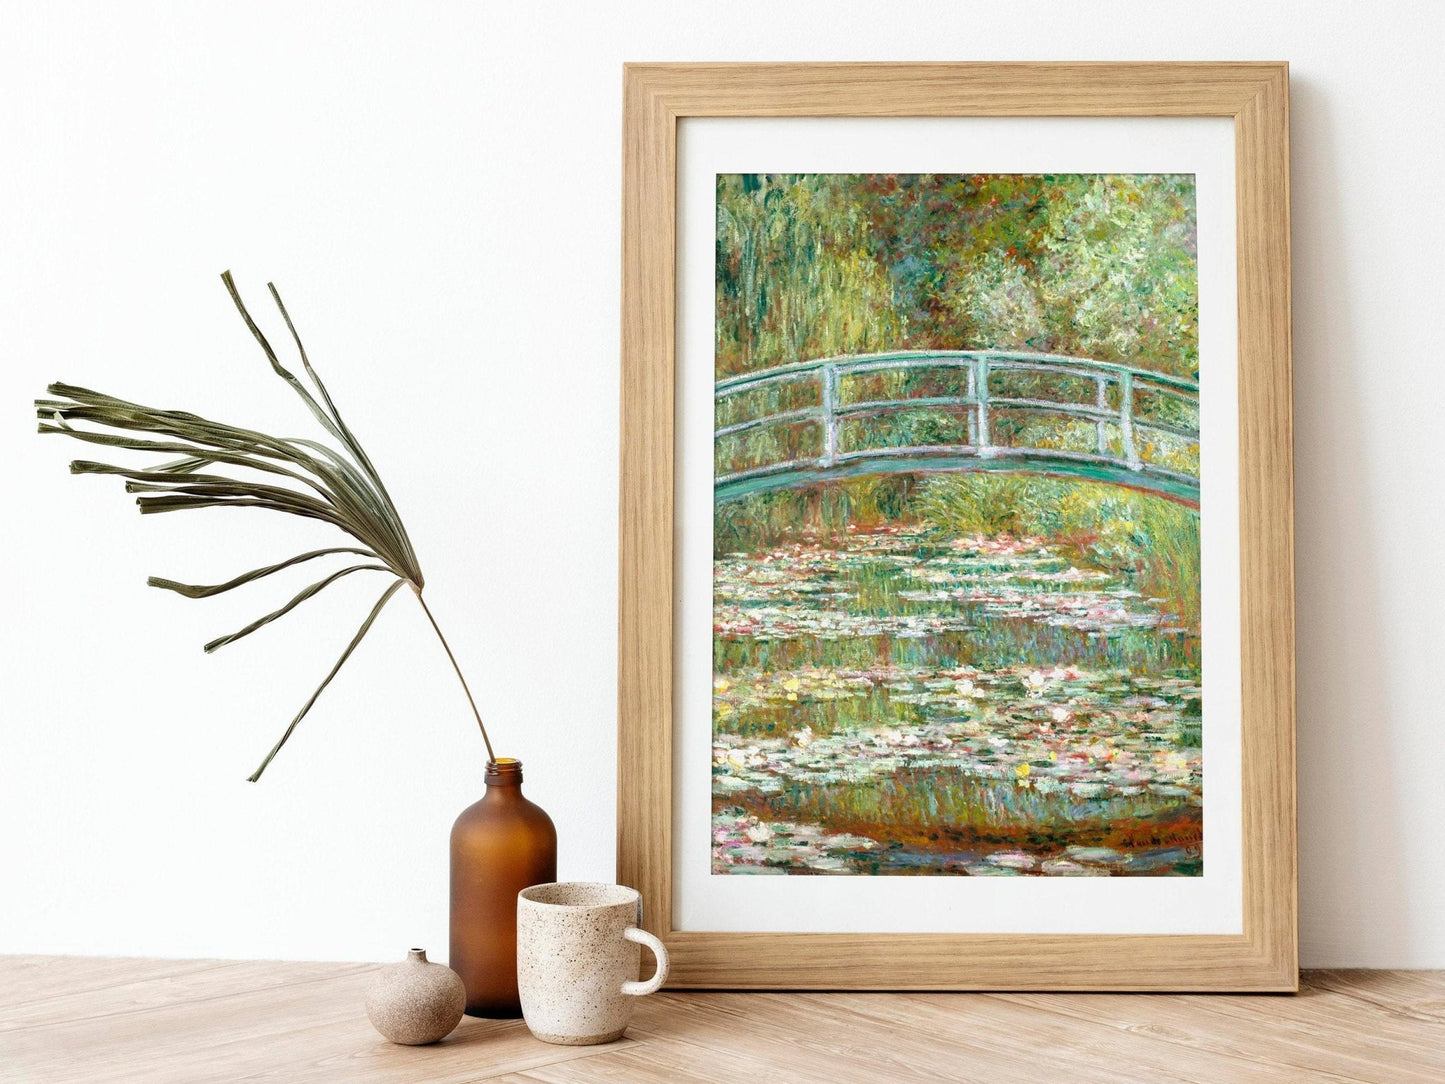 CLAUDE MONET - Bridge Over A Pond of Water Lilies